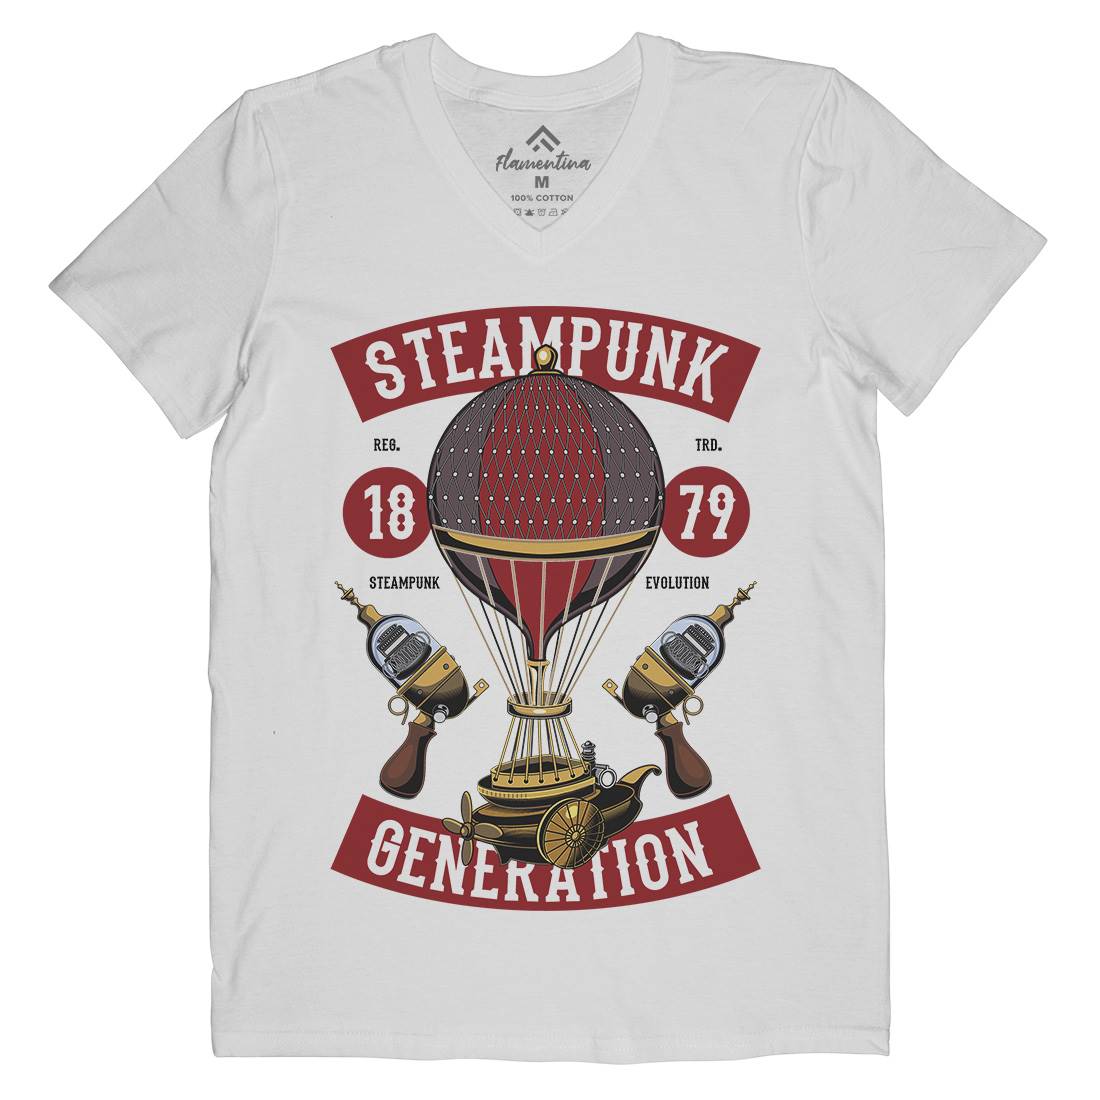 Generation Mens V-Neck T-Shirt Steampunk C449